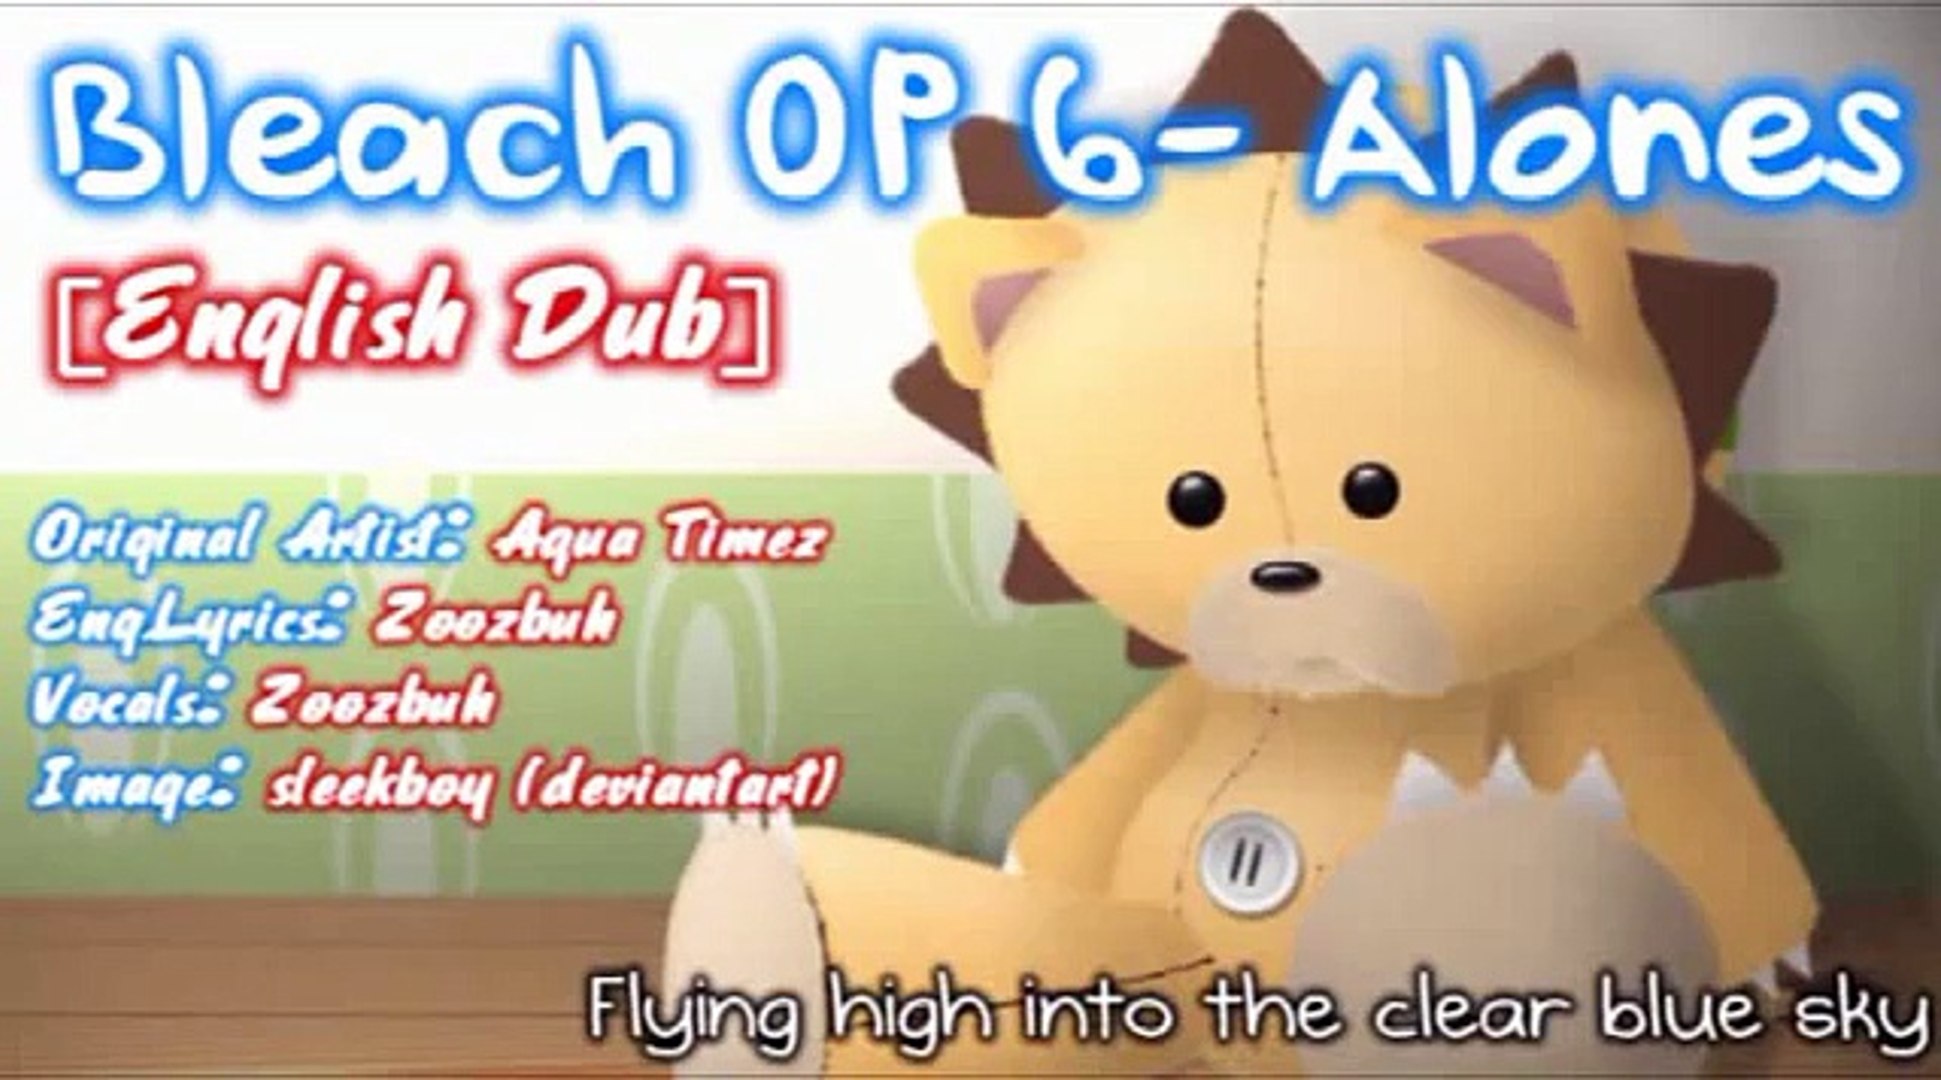 Bleach Op 6 Alones English Dub Video Dailymotion